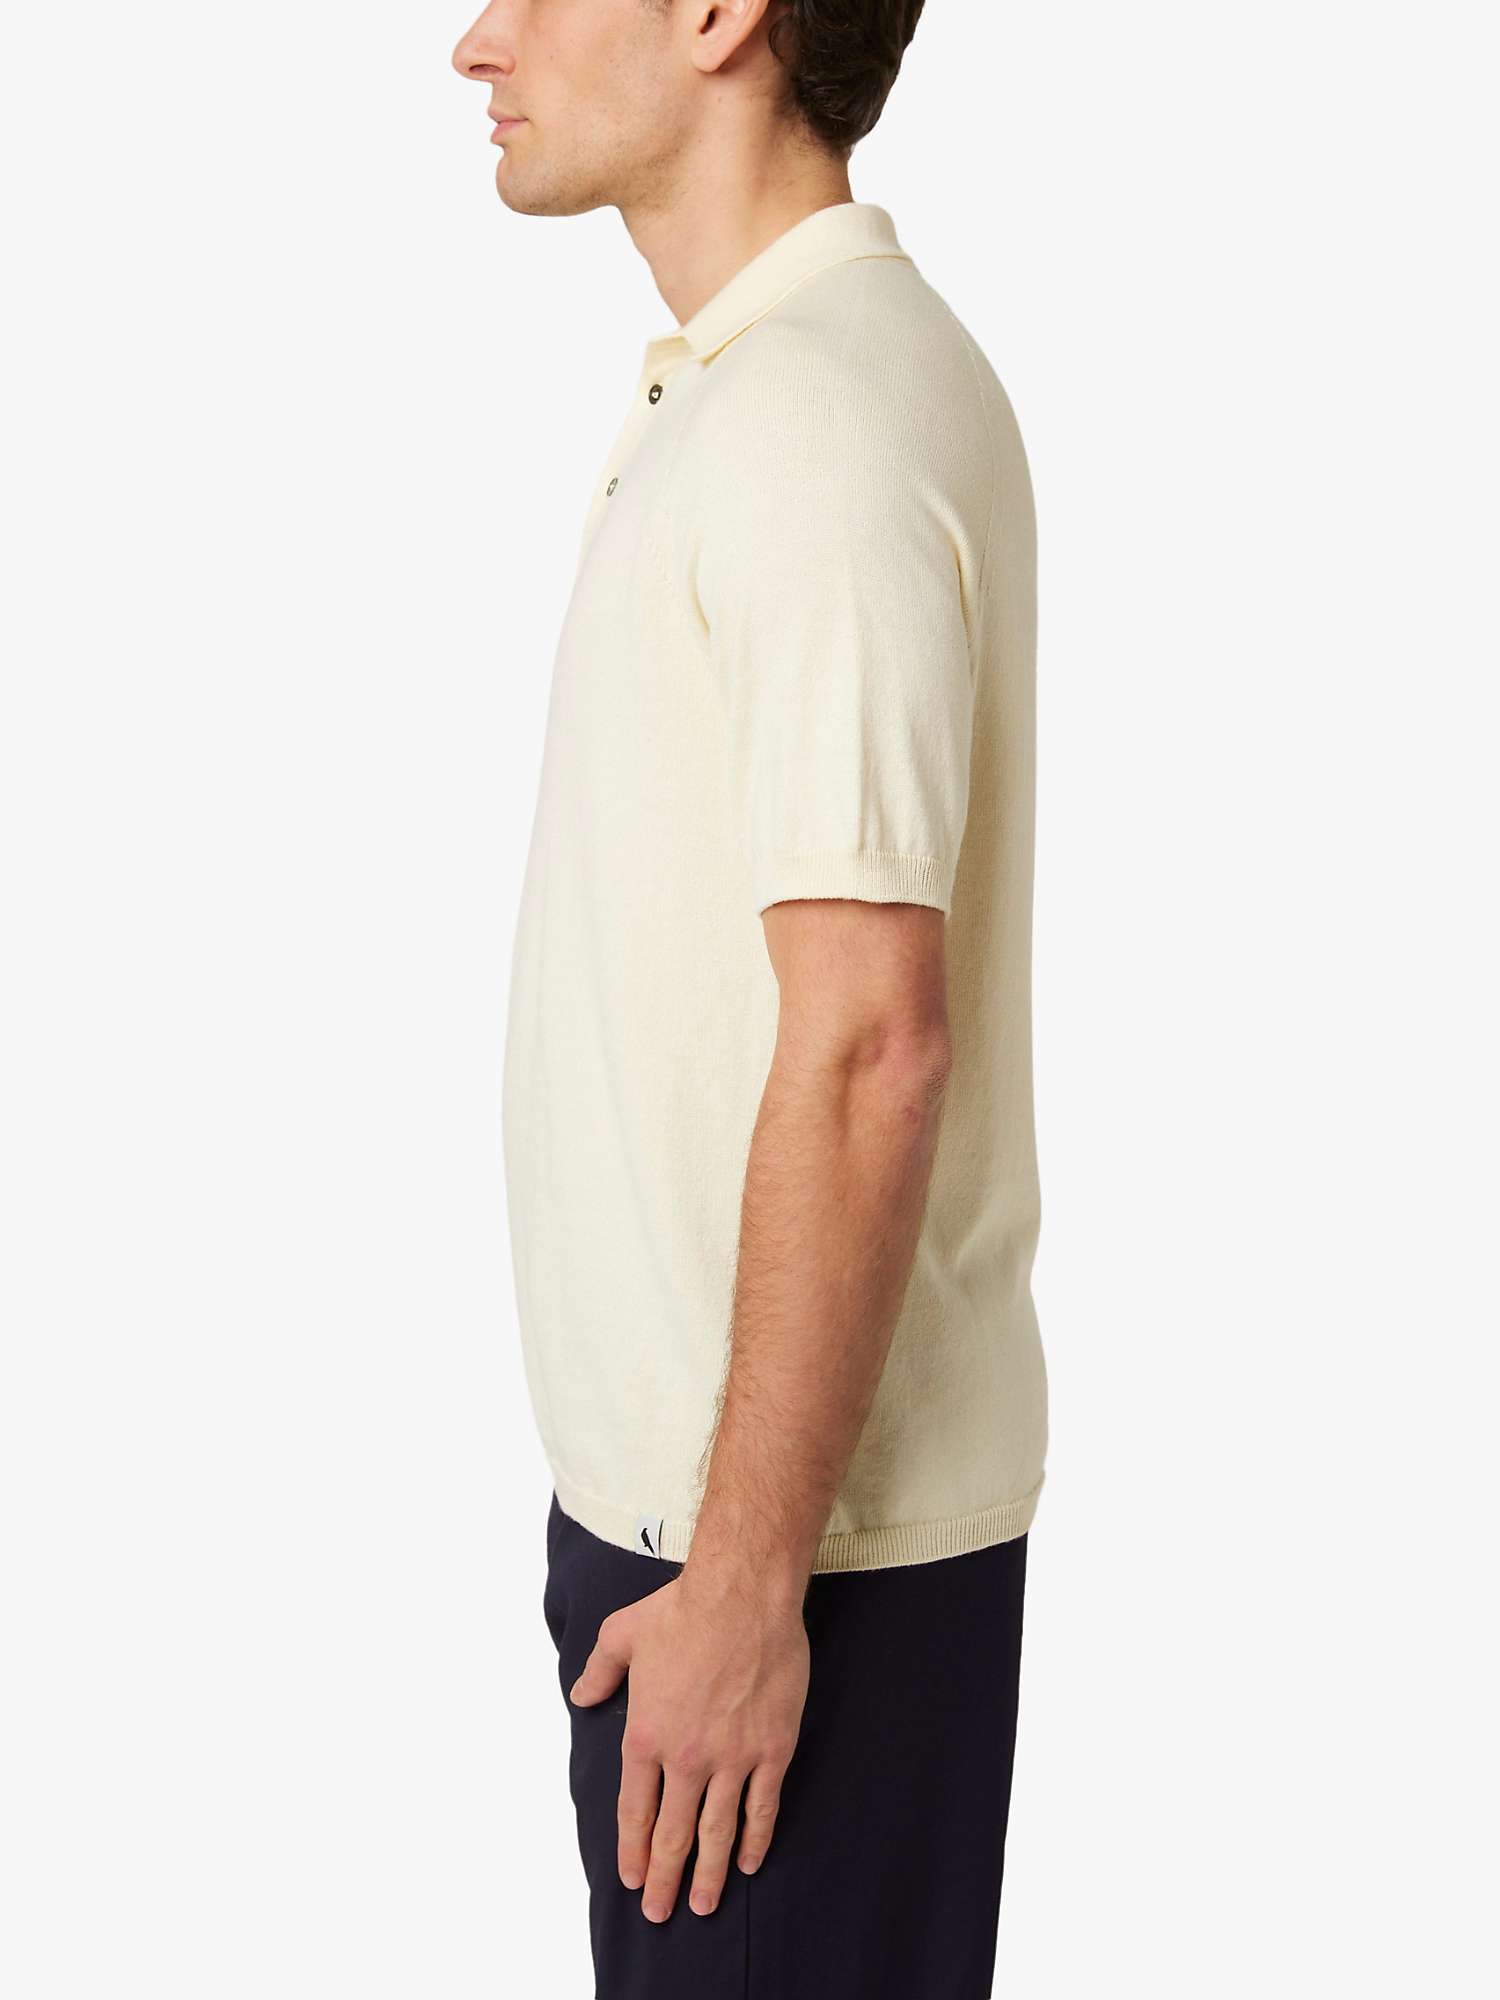 Buy Peregrine Jones Polo Shirt, White Online at johnlewis.com